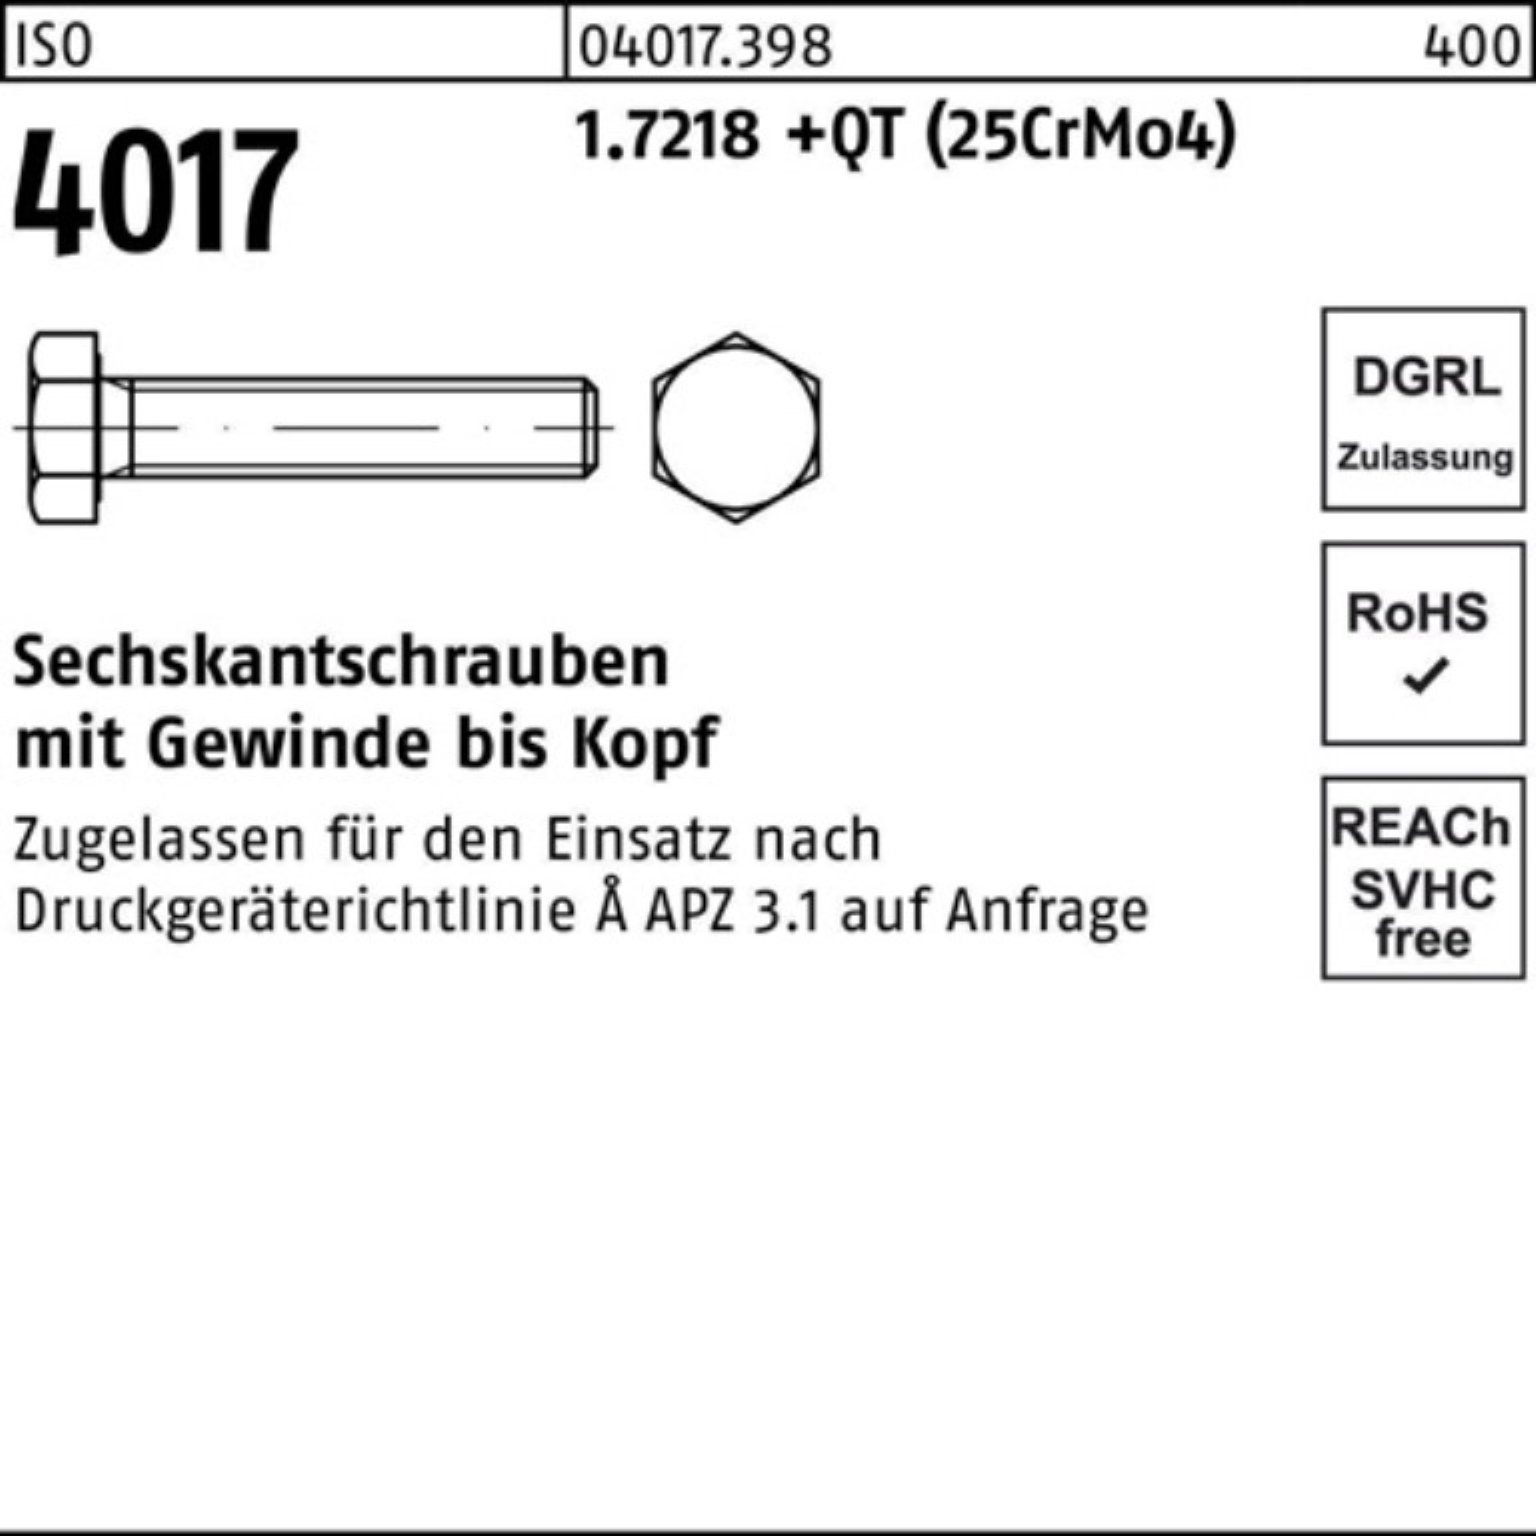 M16x 120 4017 Pack ISO Sechskantschraube 1.7218 VG +QT (25CrMo4) Bufab Sechskantschraube 100er